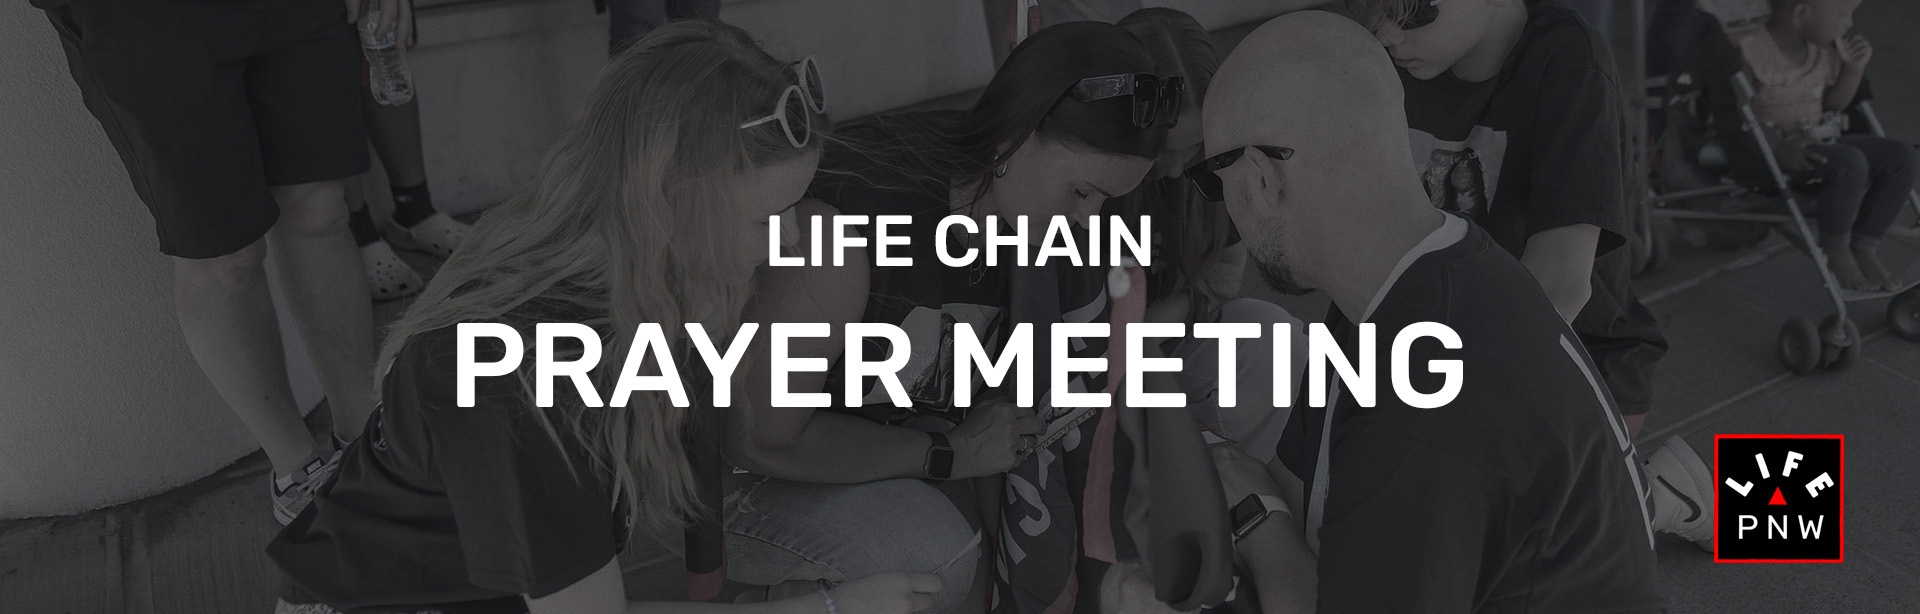 Life Chain Pre-event Prayer